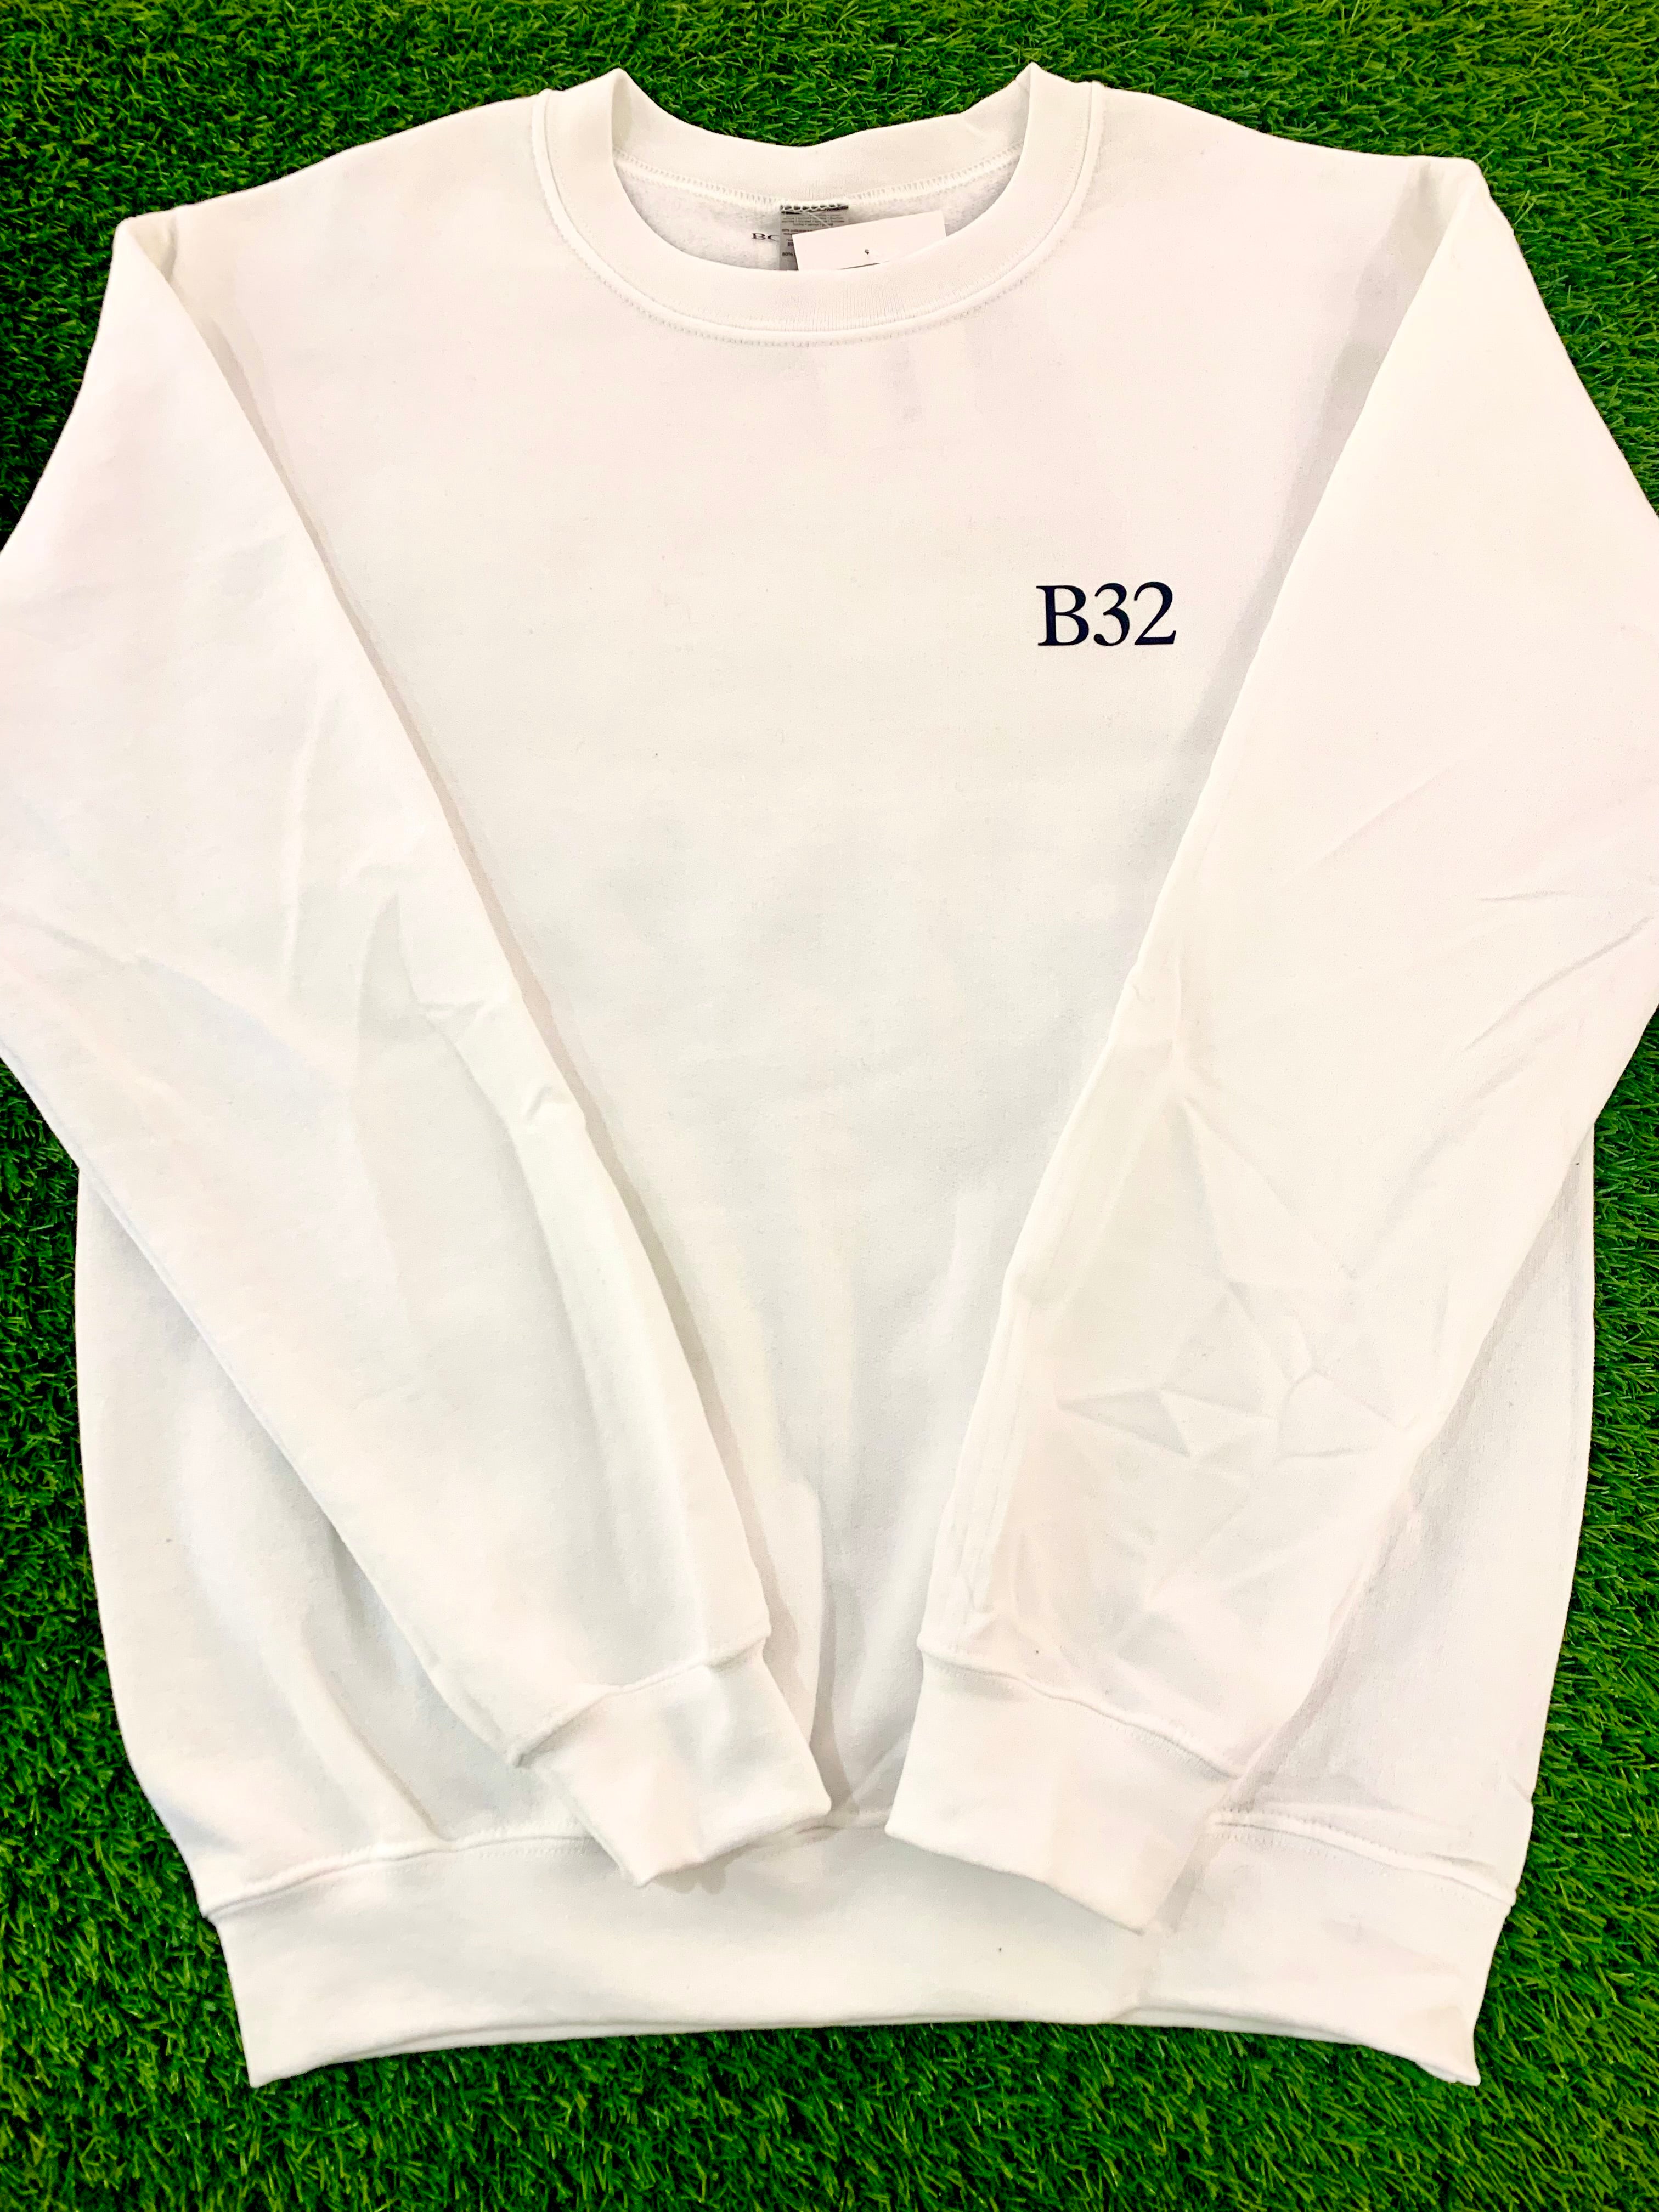 Mens B32 Sweatshirt - White